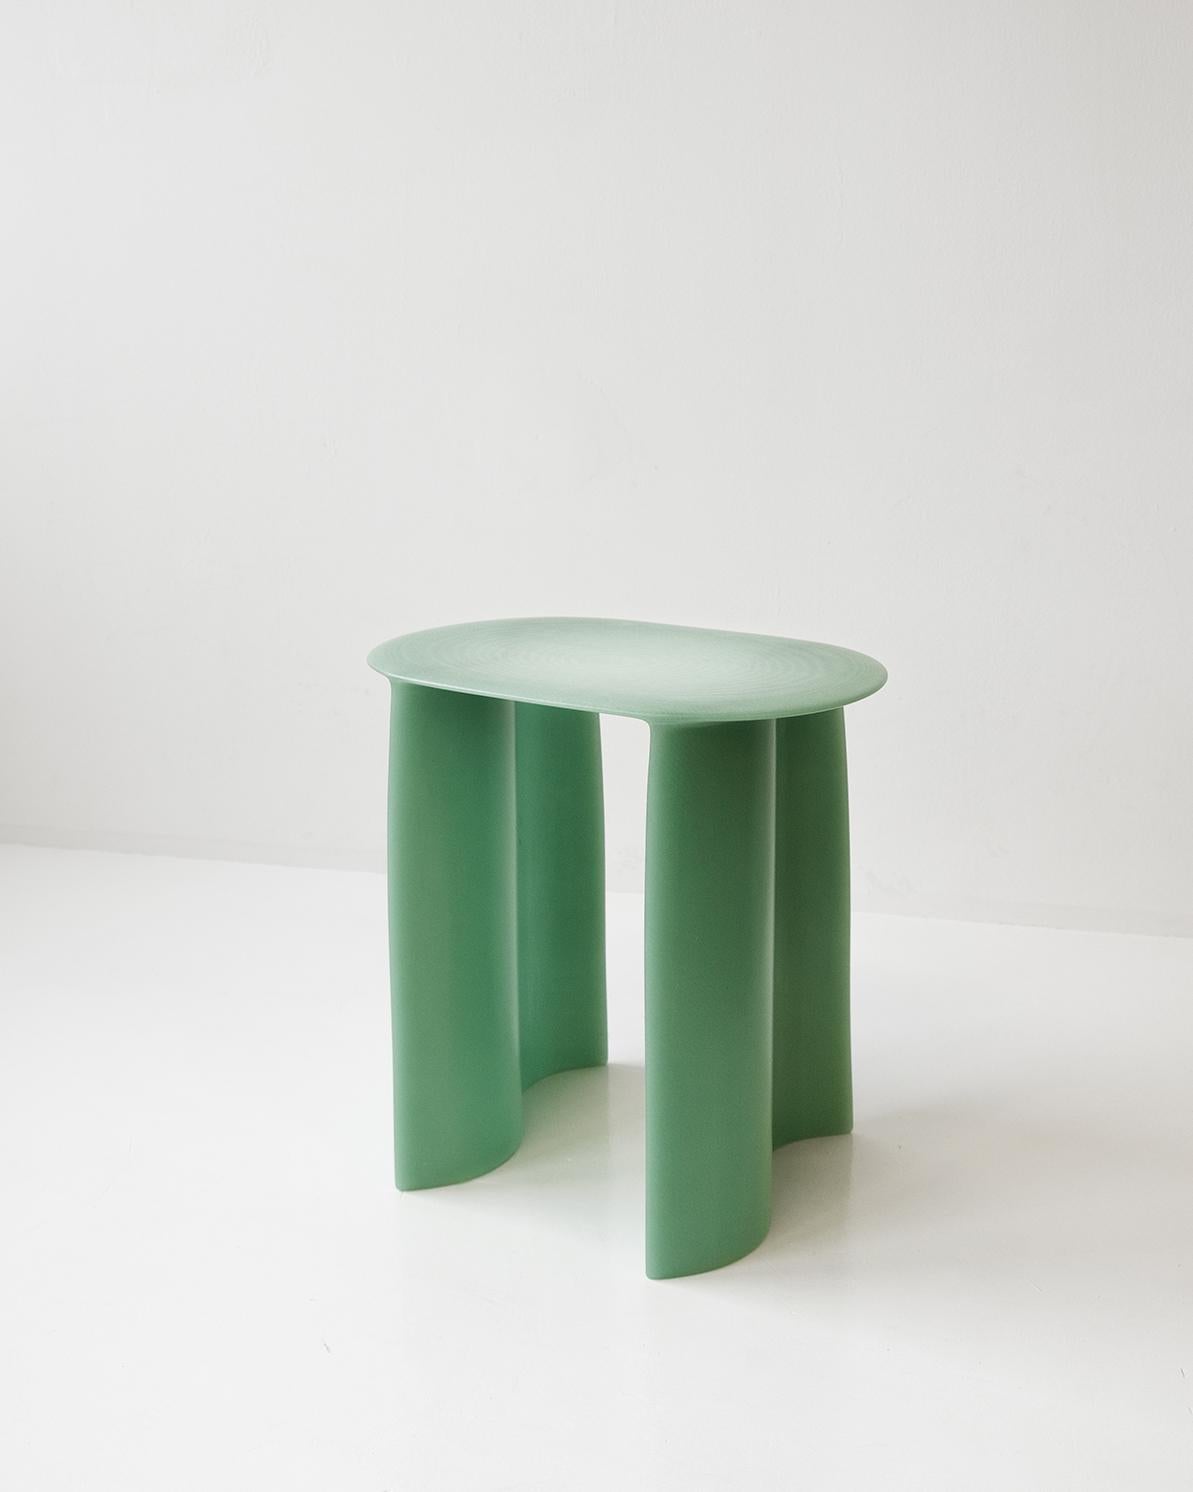 Dutch Contemporary light green Fiberglass, New Wave Side Table, by Lukas Cober